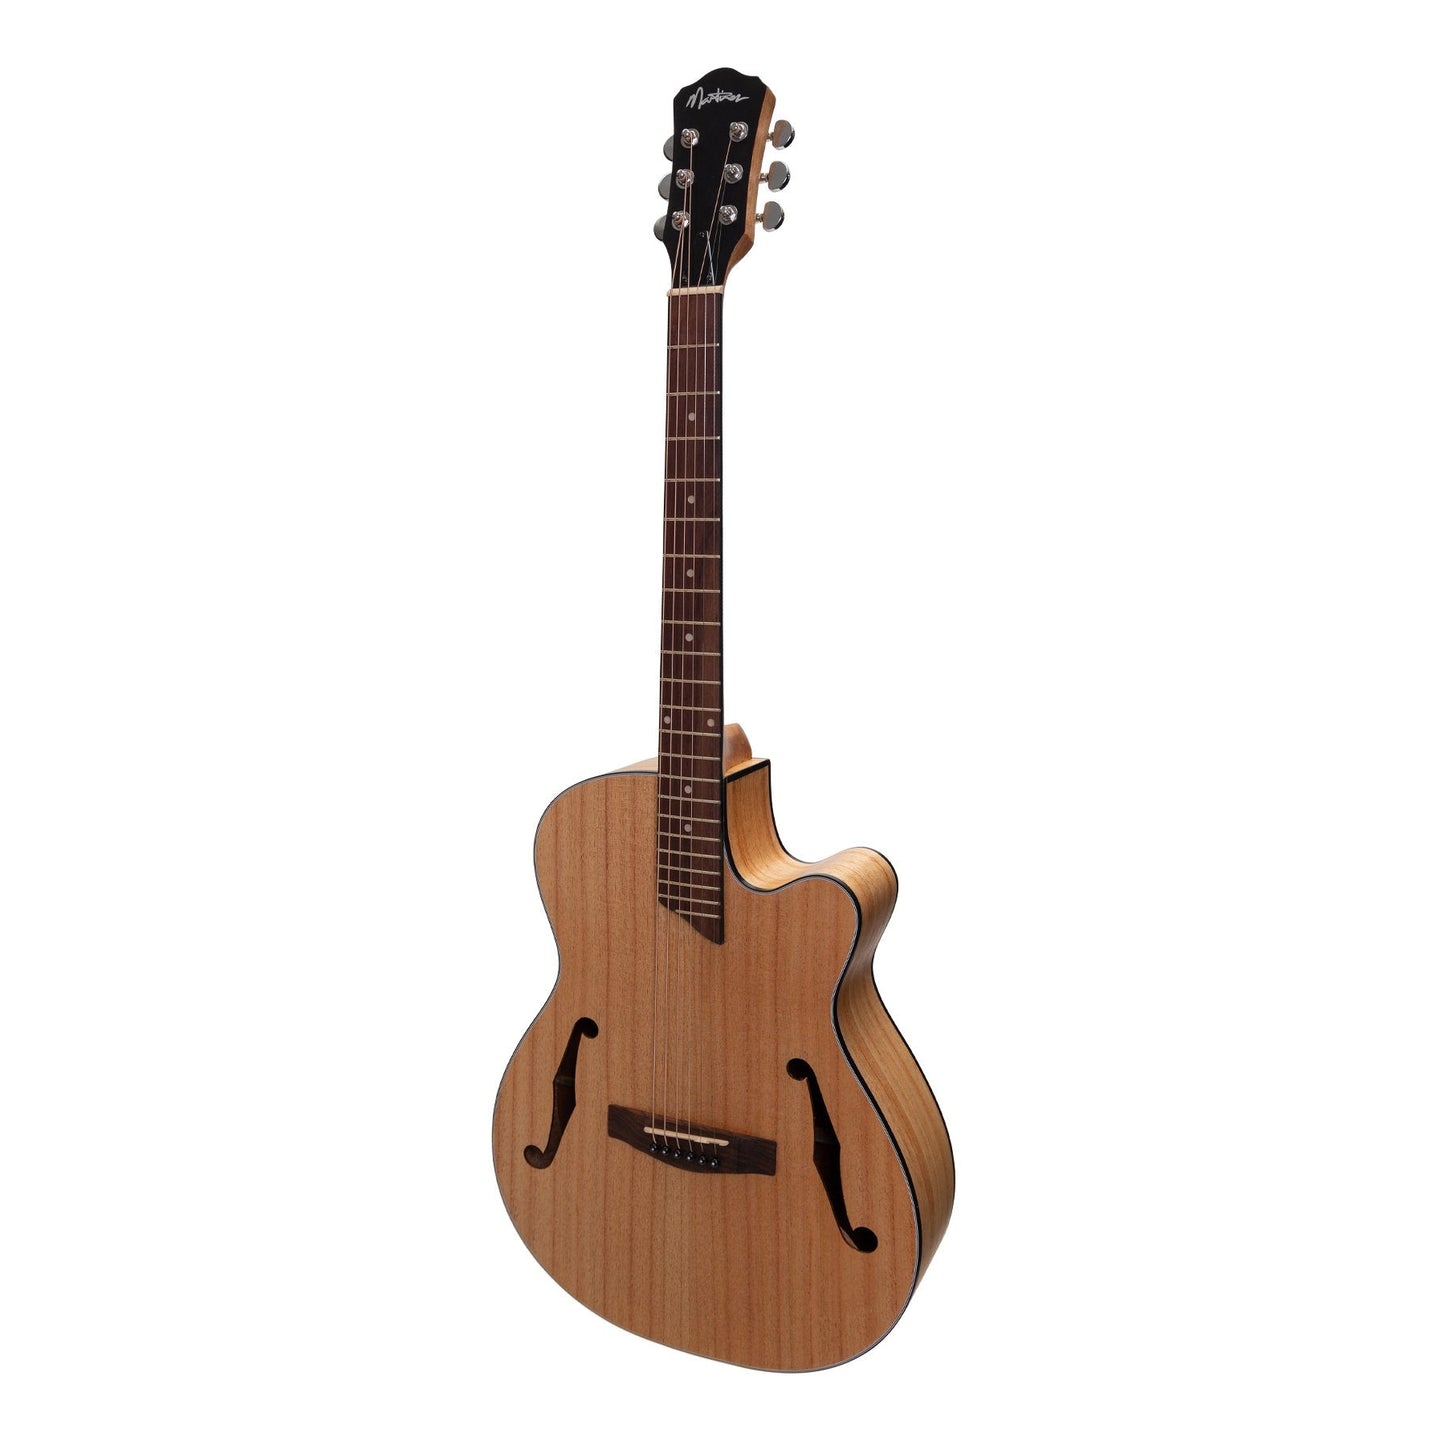 Martinez Jazz Hybrid Acoustic-Electric Small Body Cutaway Guitar (Mindi-Wood)